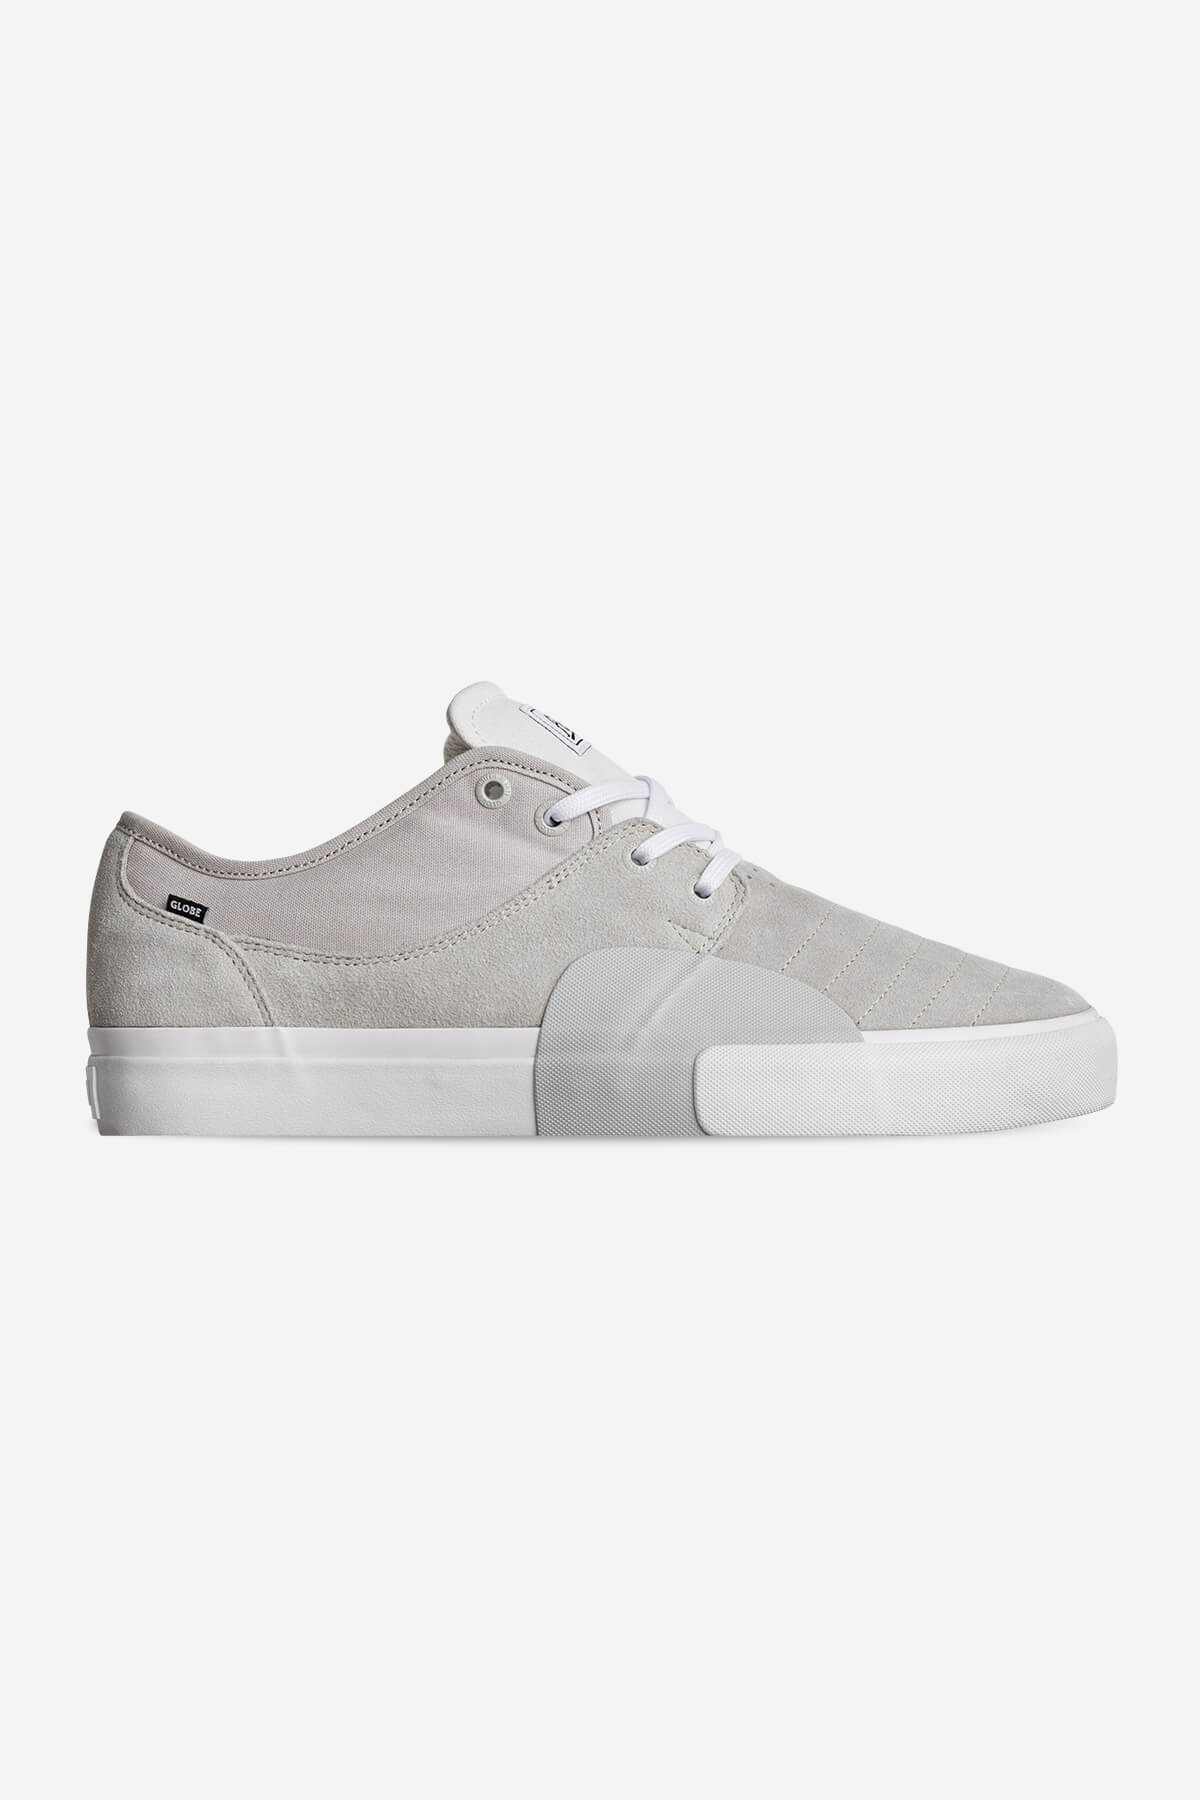 mahalo plus grey white skate shoes